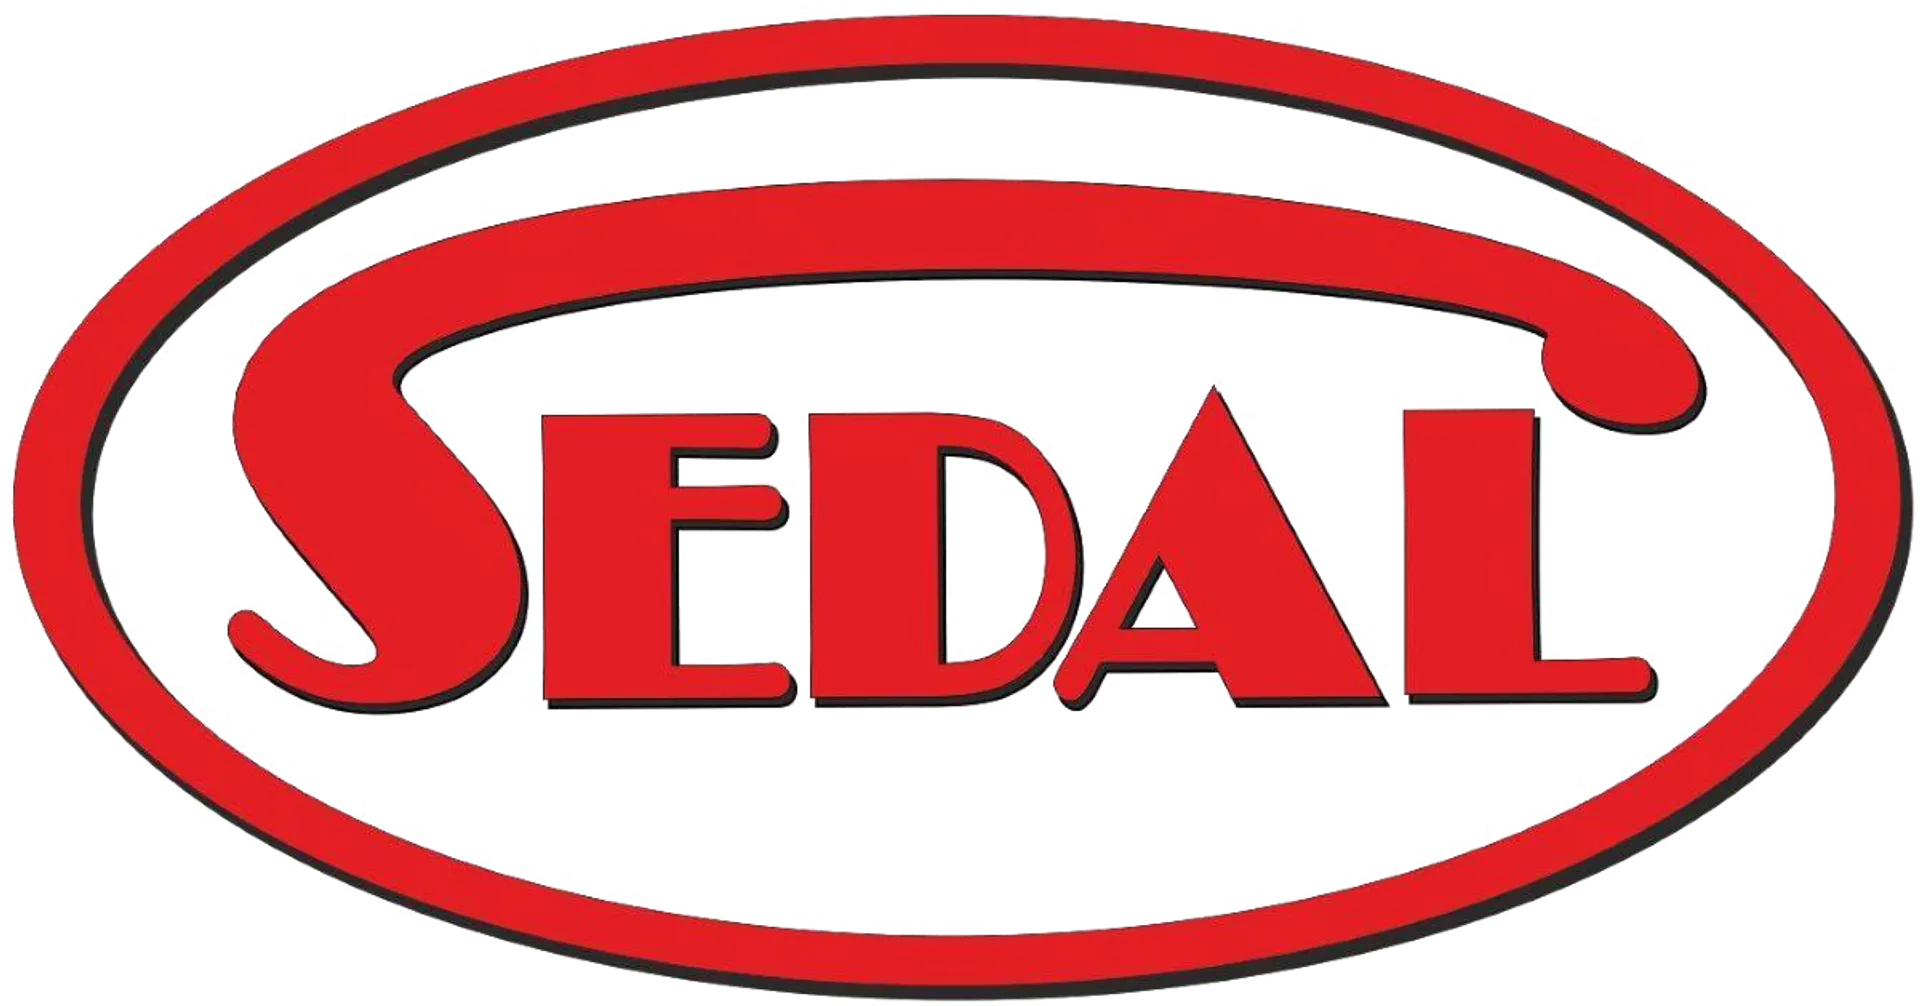 SEDAL logo